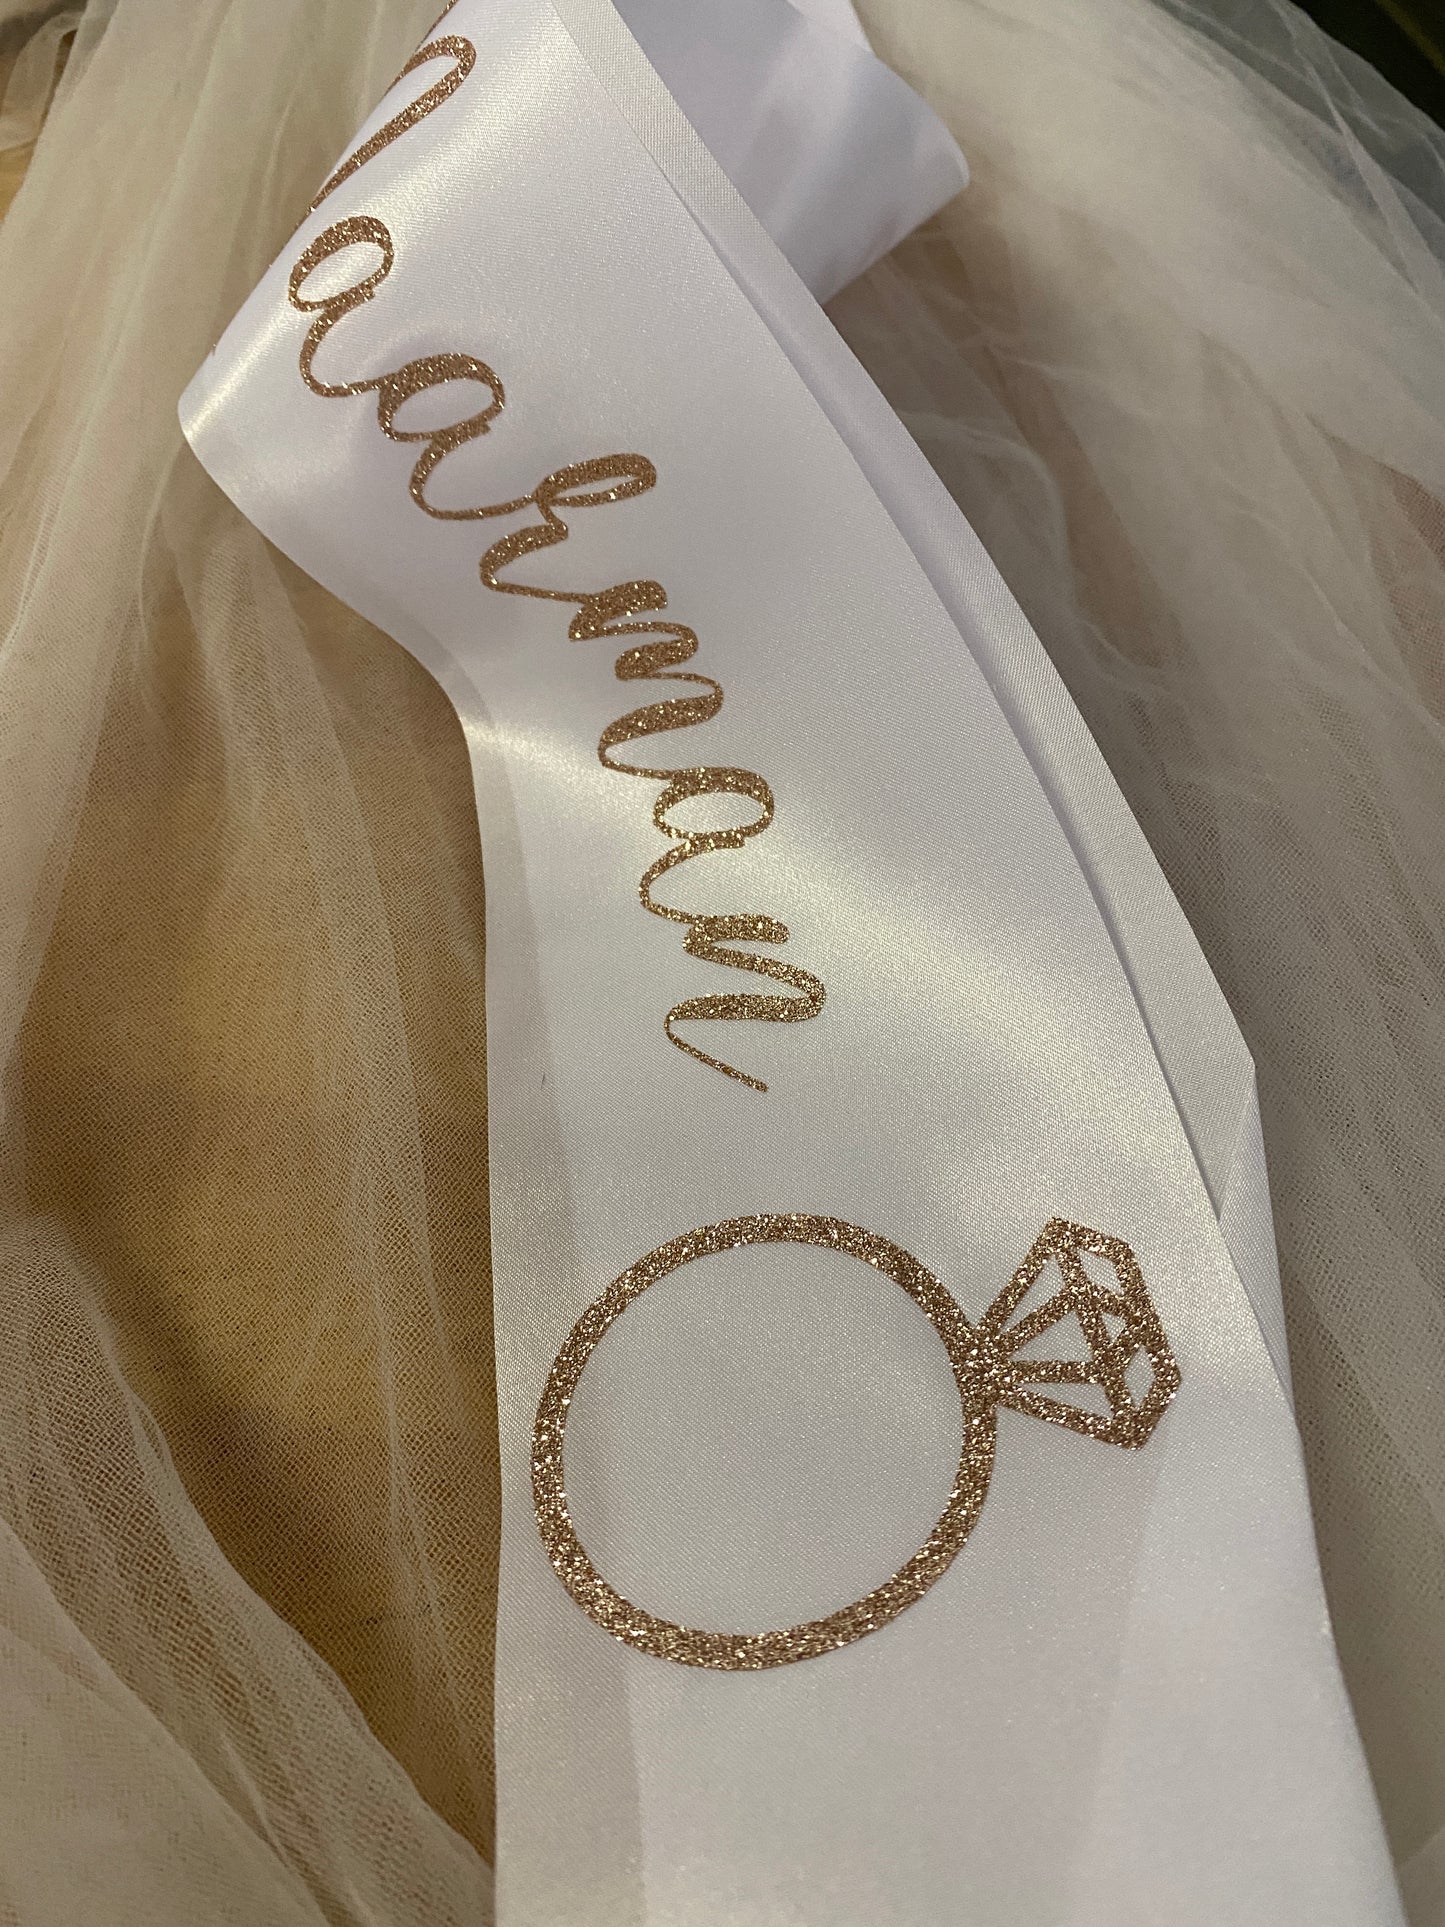 Personalized Bridal Sash